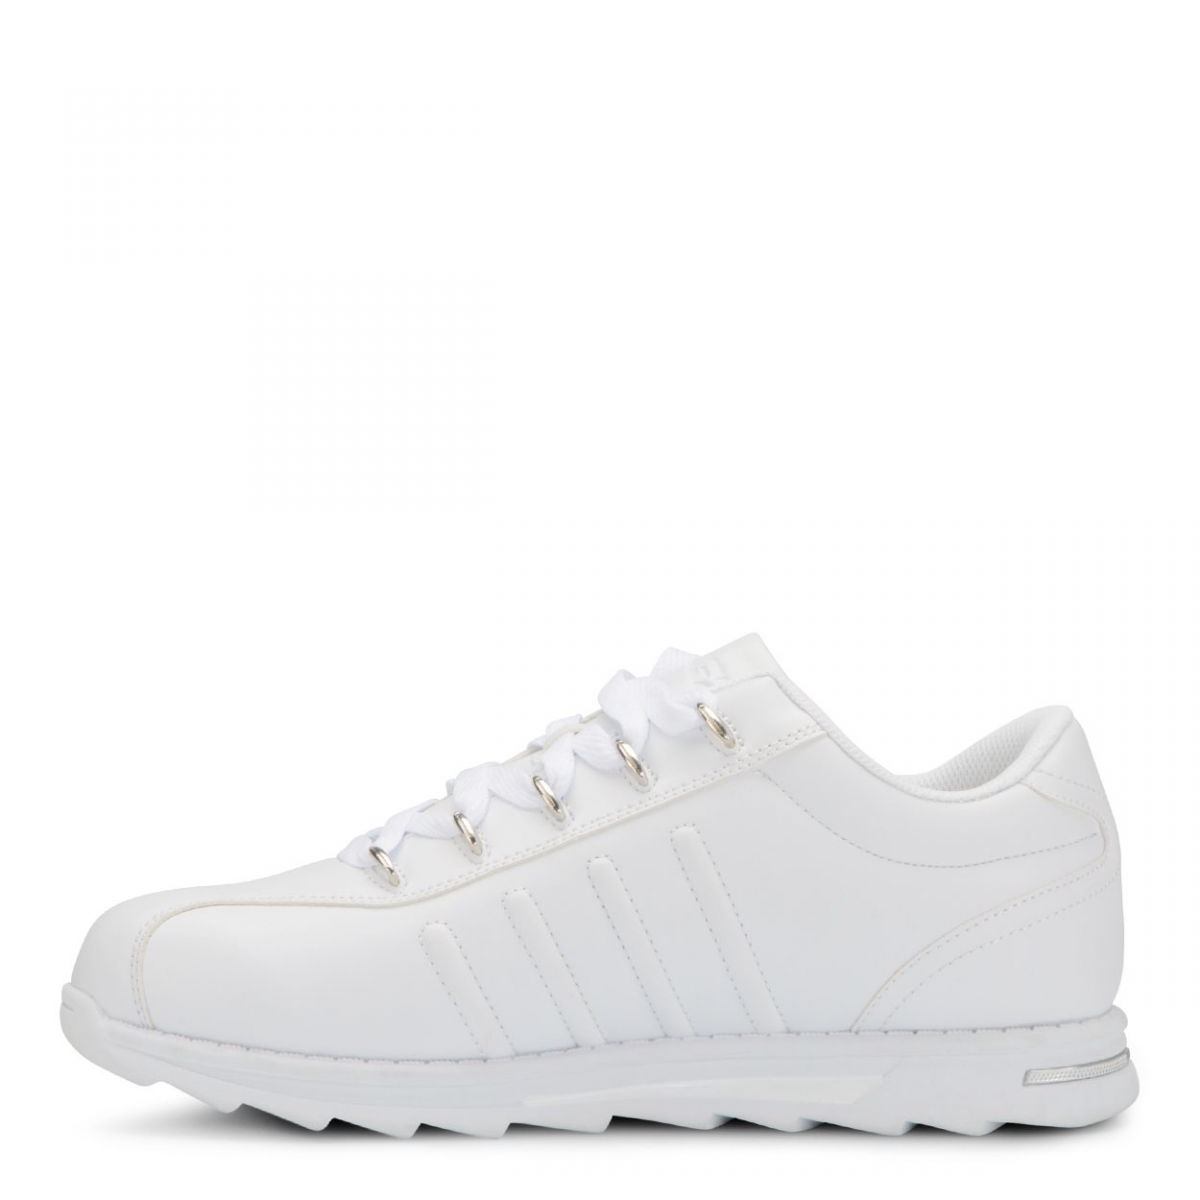 Lugz Men's Changeover II Sneaker White - MCHGIIV-100 WHITE - WHITE, 7.5